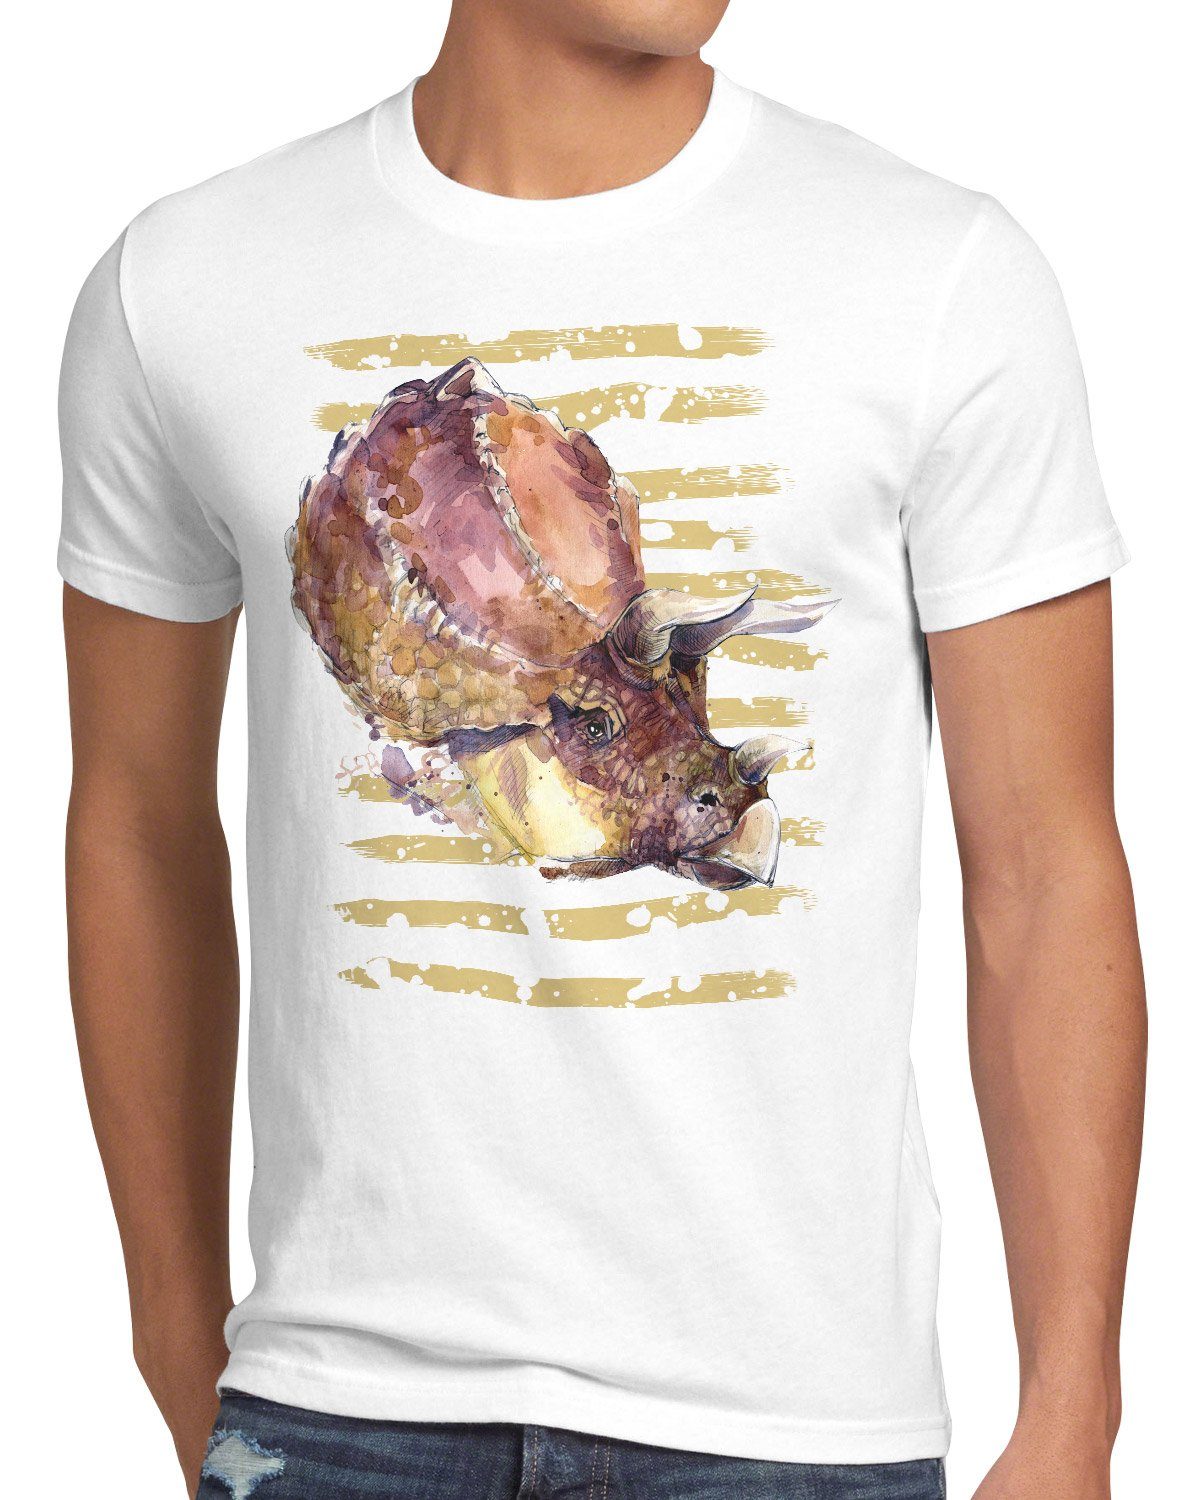 Verkaufsförderungsaktion style3 Print-Shirt T-Shirt dreihorn Triceratops Herren dinosaurier